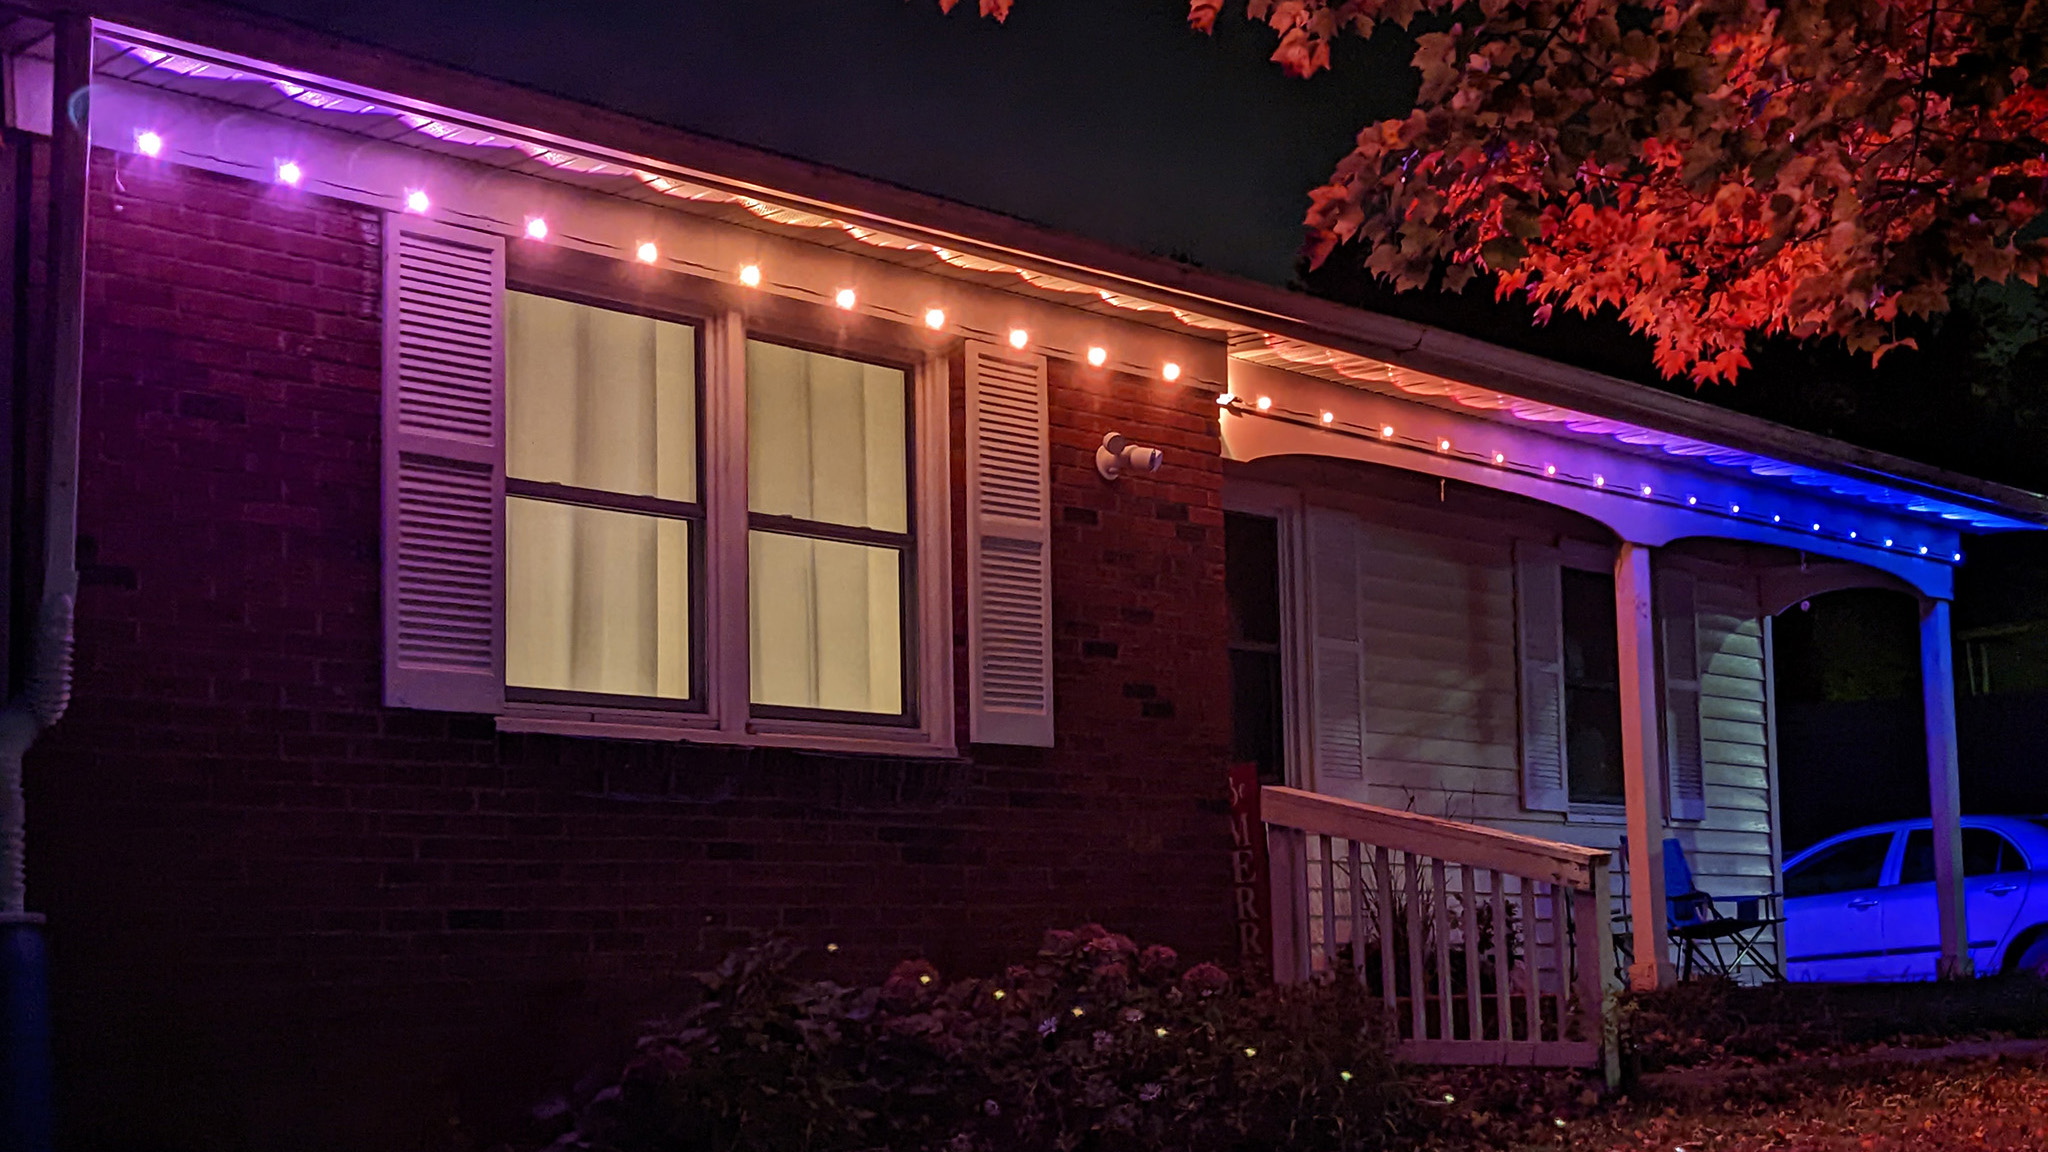 Govee Permanent Outdoor Lights: Never put up Christmas lights